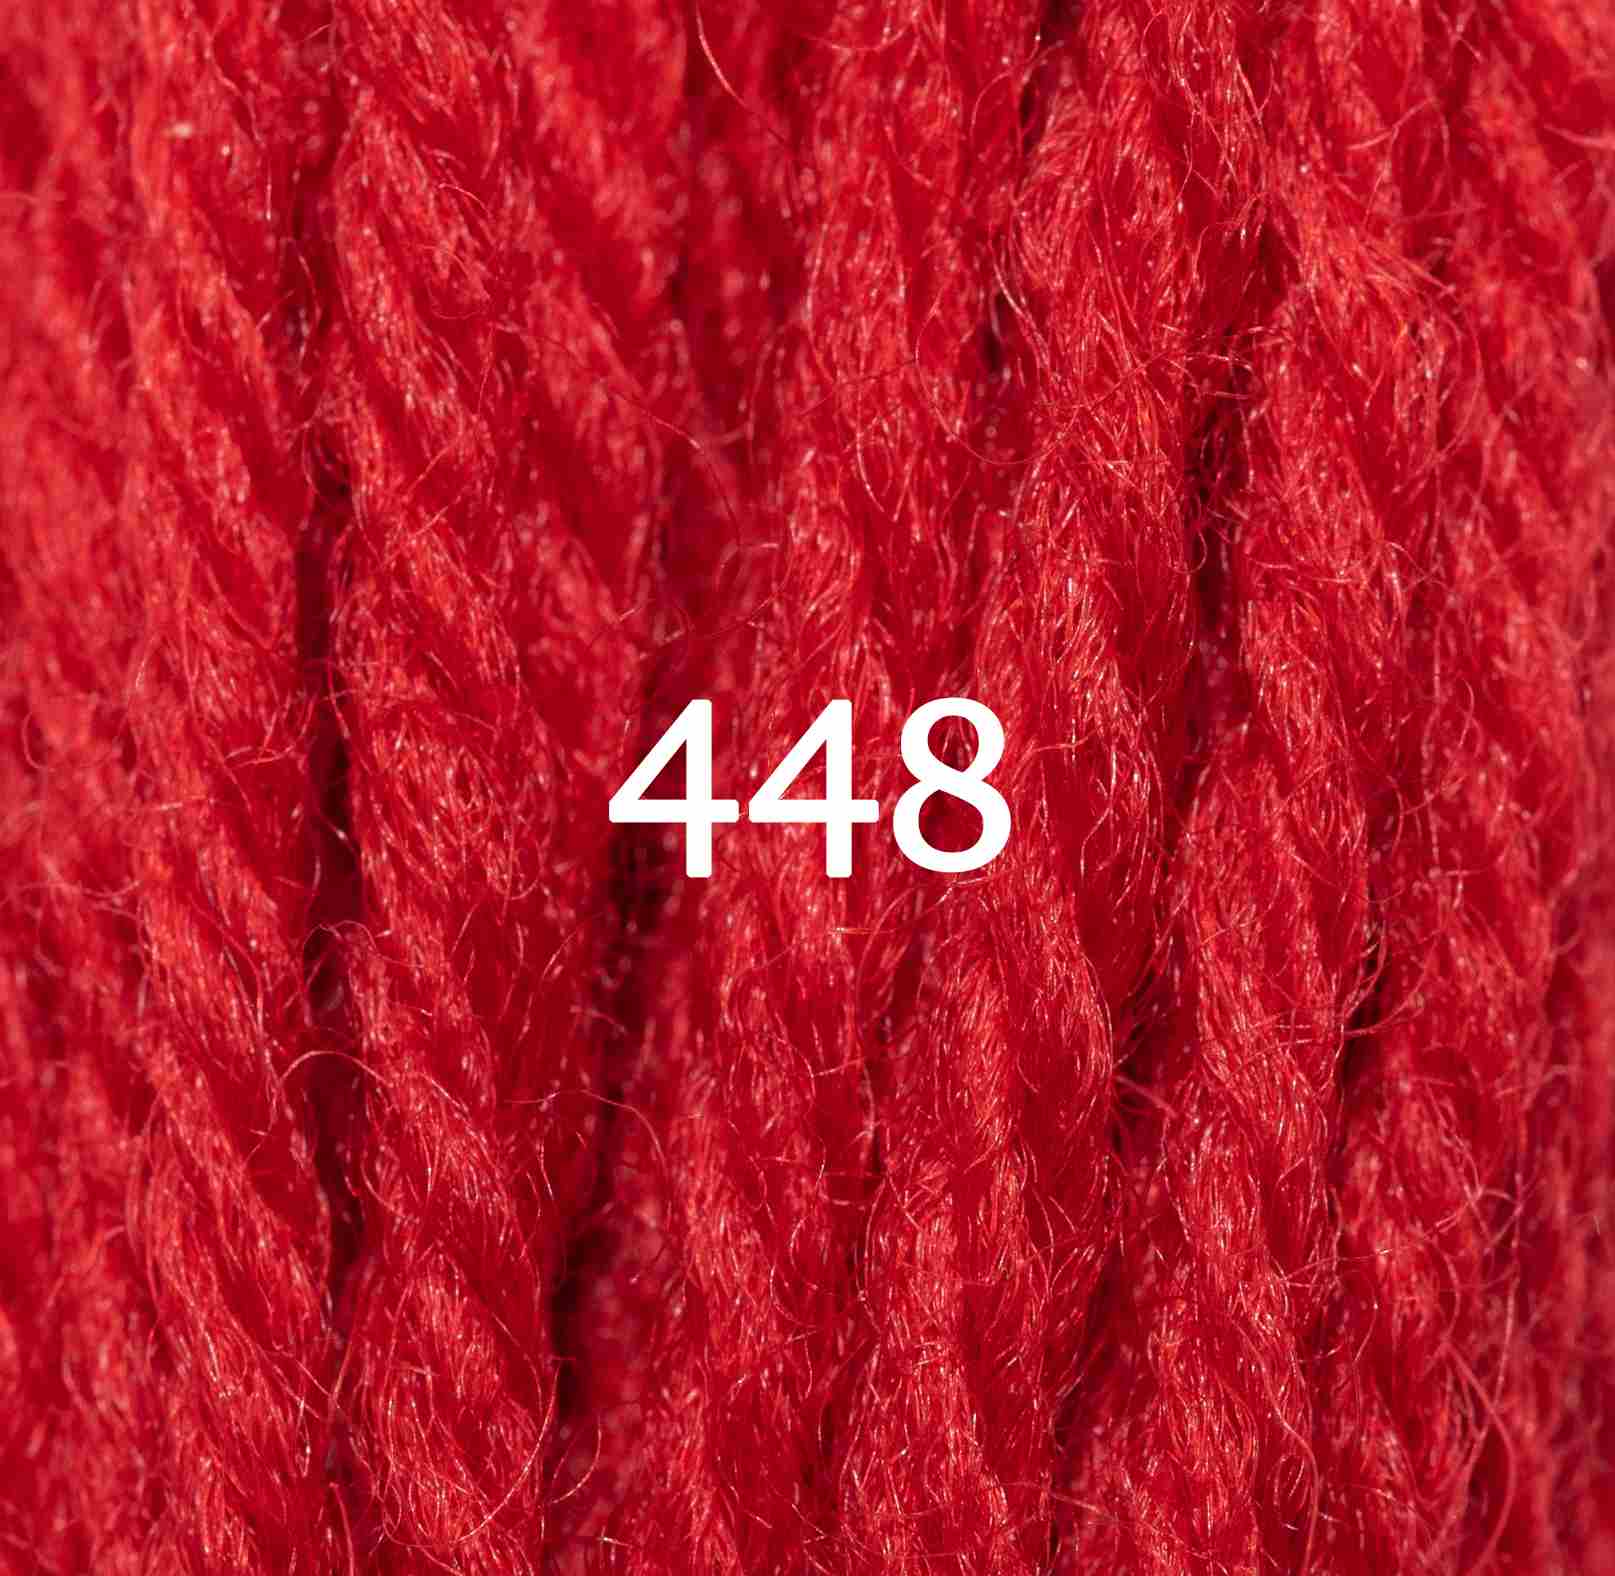 Appletons Tapestry Wool - Reds